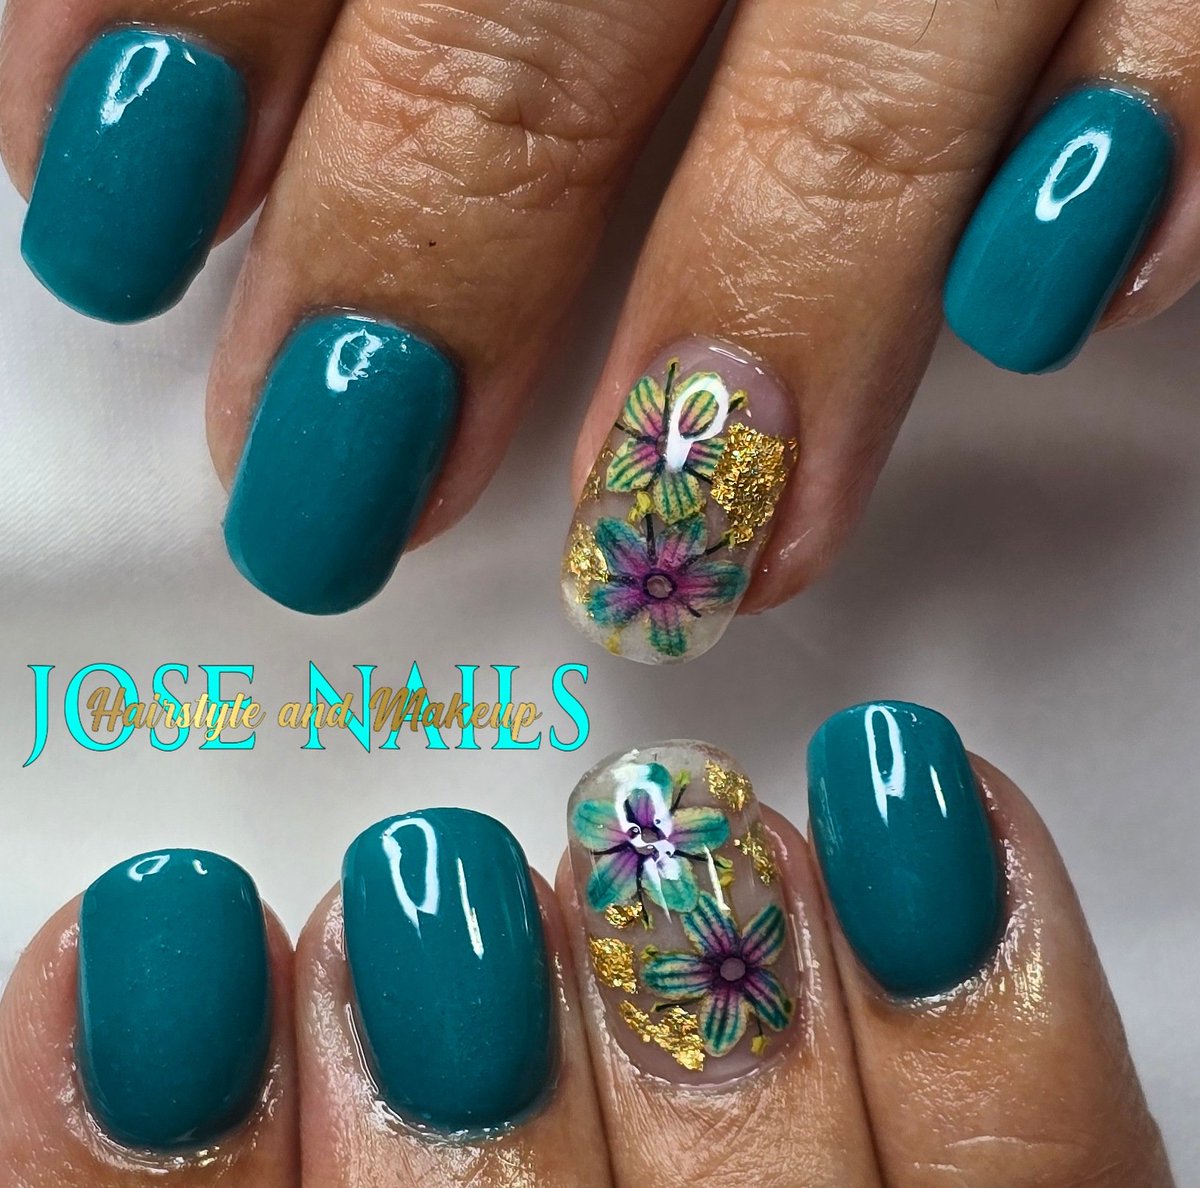 #turquesa #flores de Katherine Lopez 
#josenailshairstyleandmakeup 
#nailsalon #nailtechnique #nailsboricua #nailsfashionnails #naileducation #nailstyle